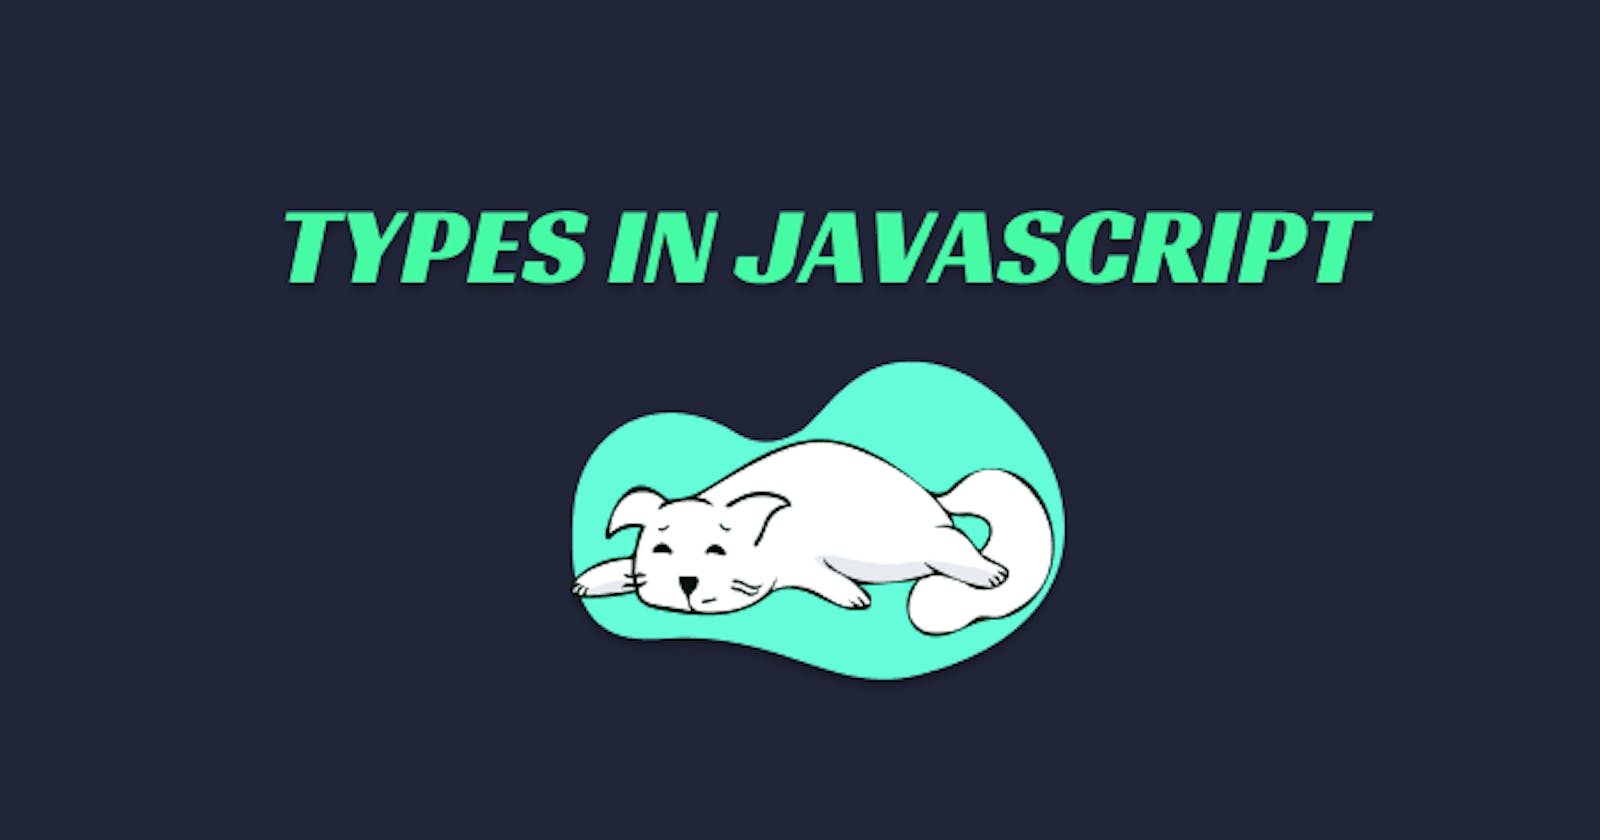 Types in JavaScript